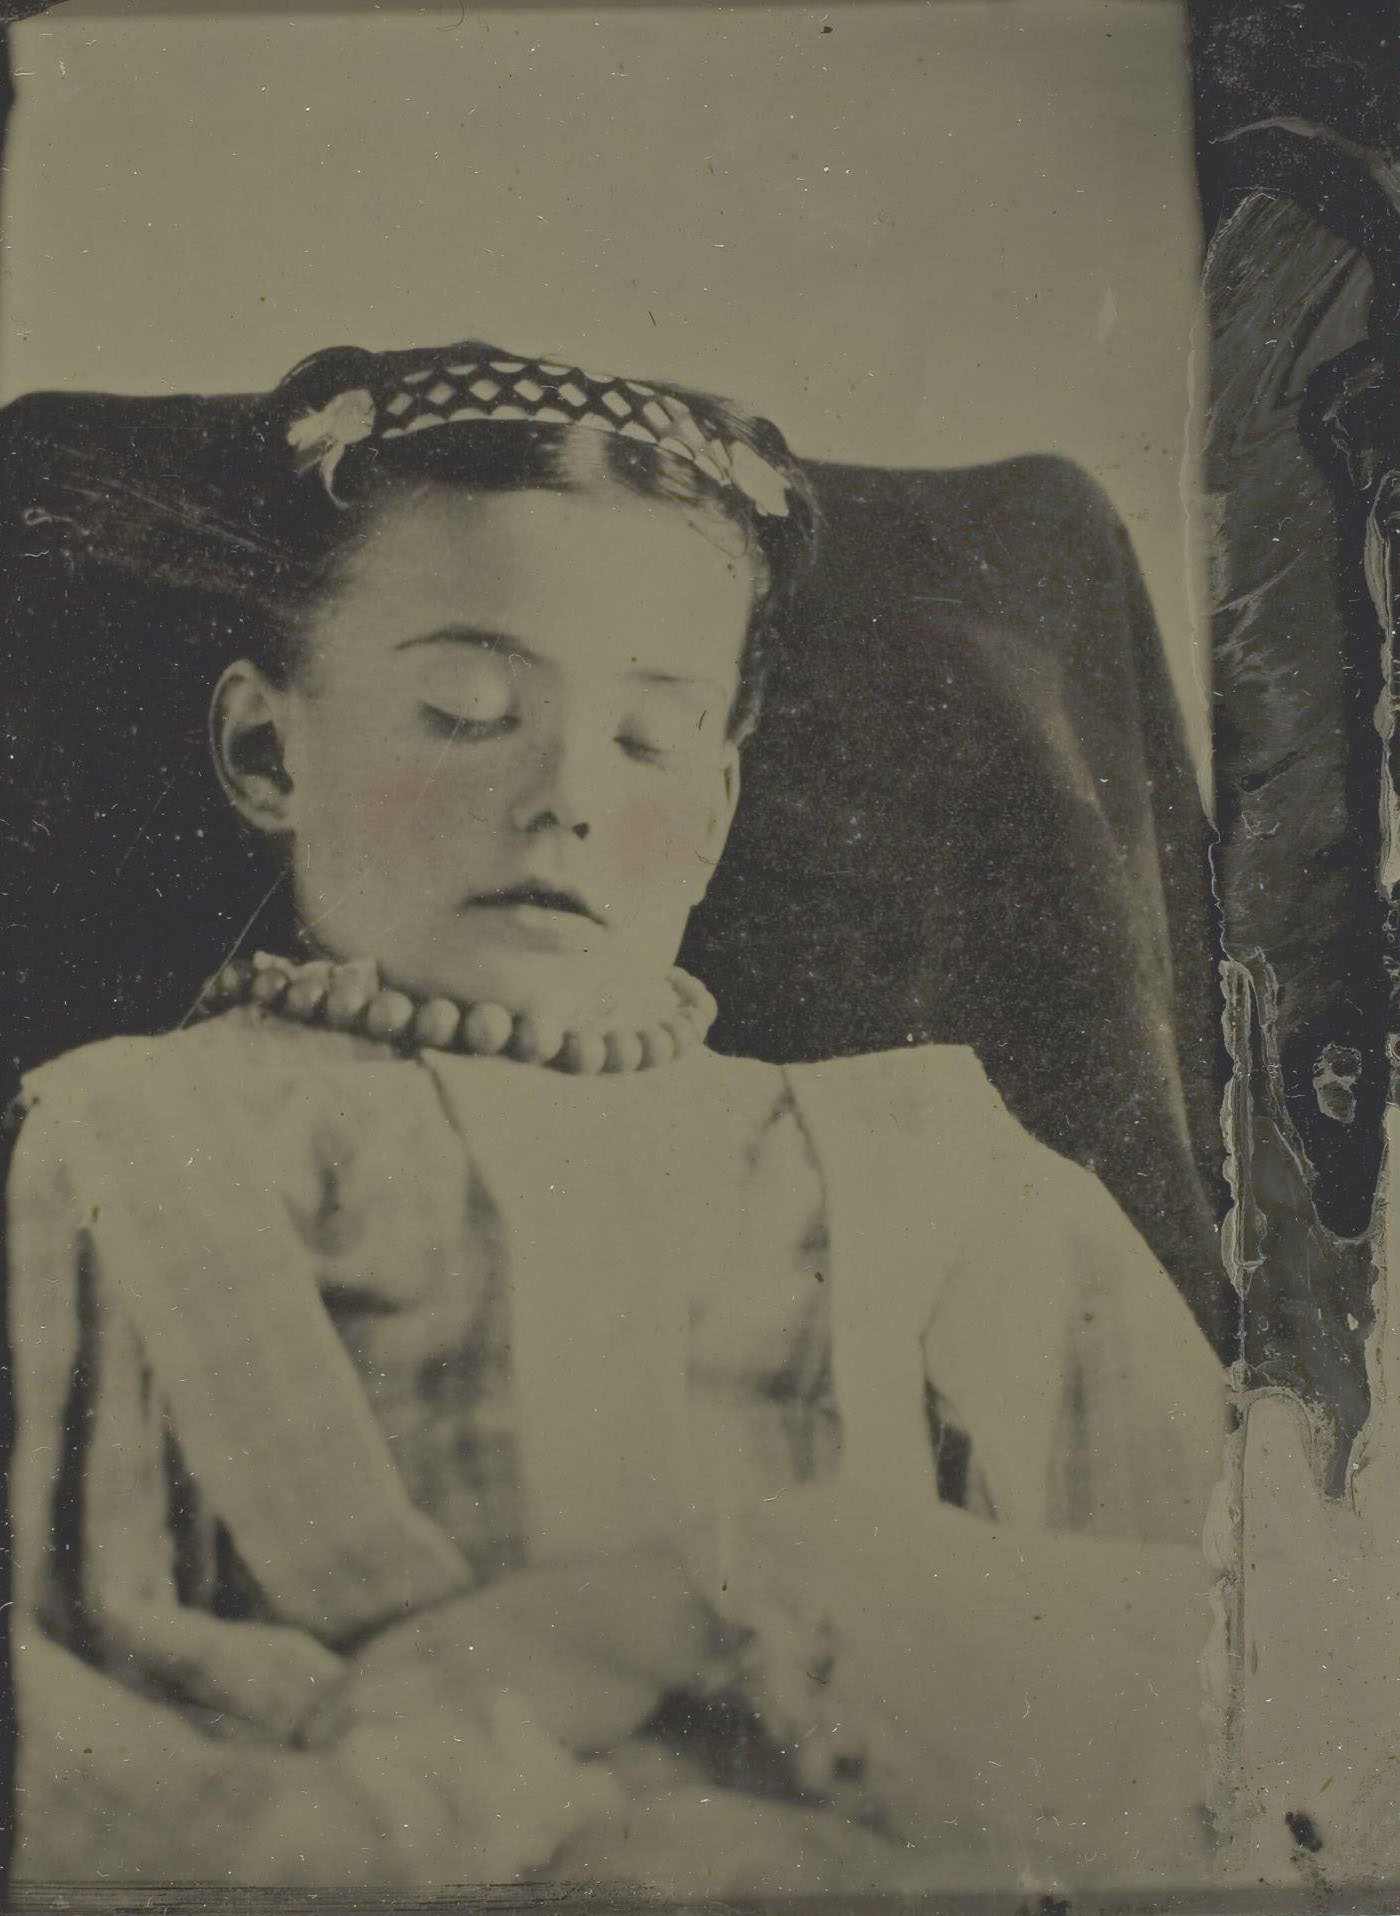 postmortem portrait of a child, 1870